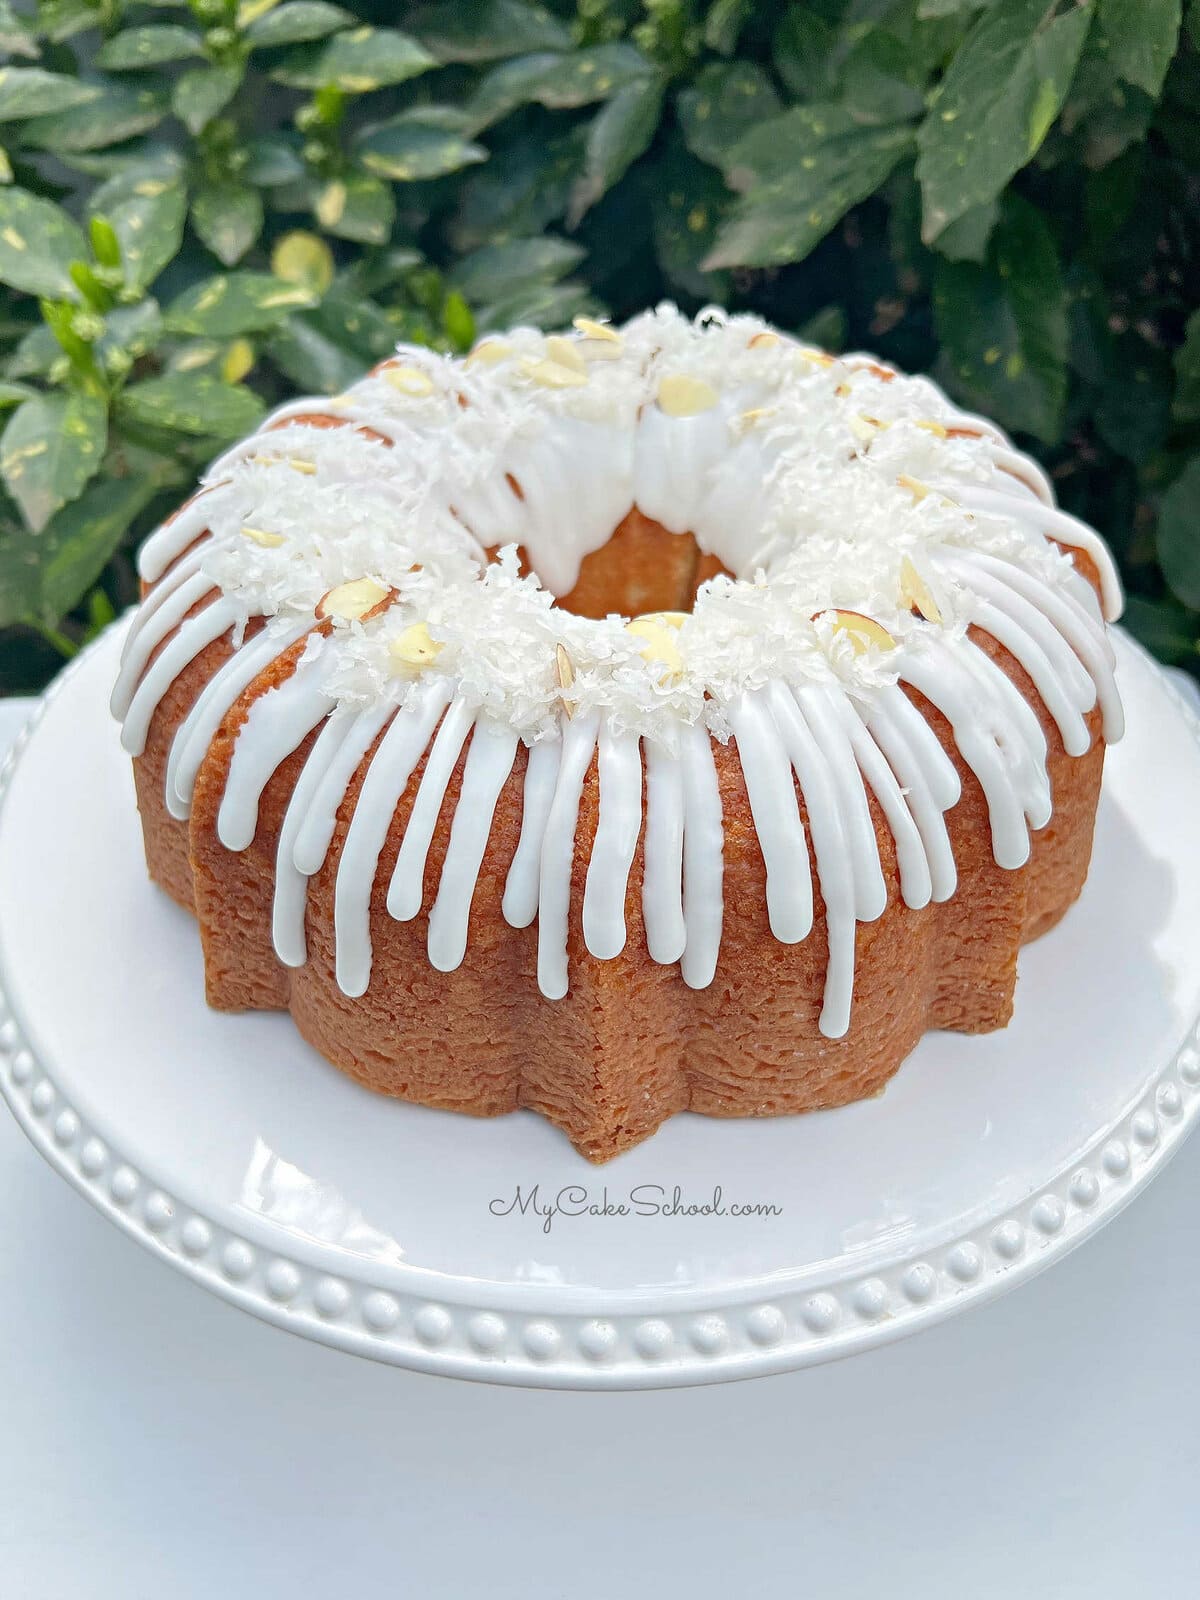 https://www.mycakeschool.com/images/2023/04/Almond-Coconut-Bundt-Cake-image-.jpg